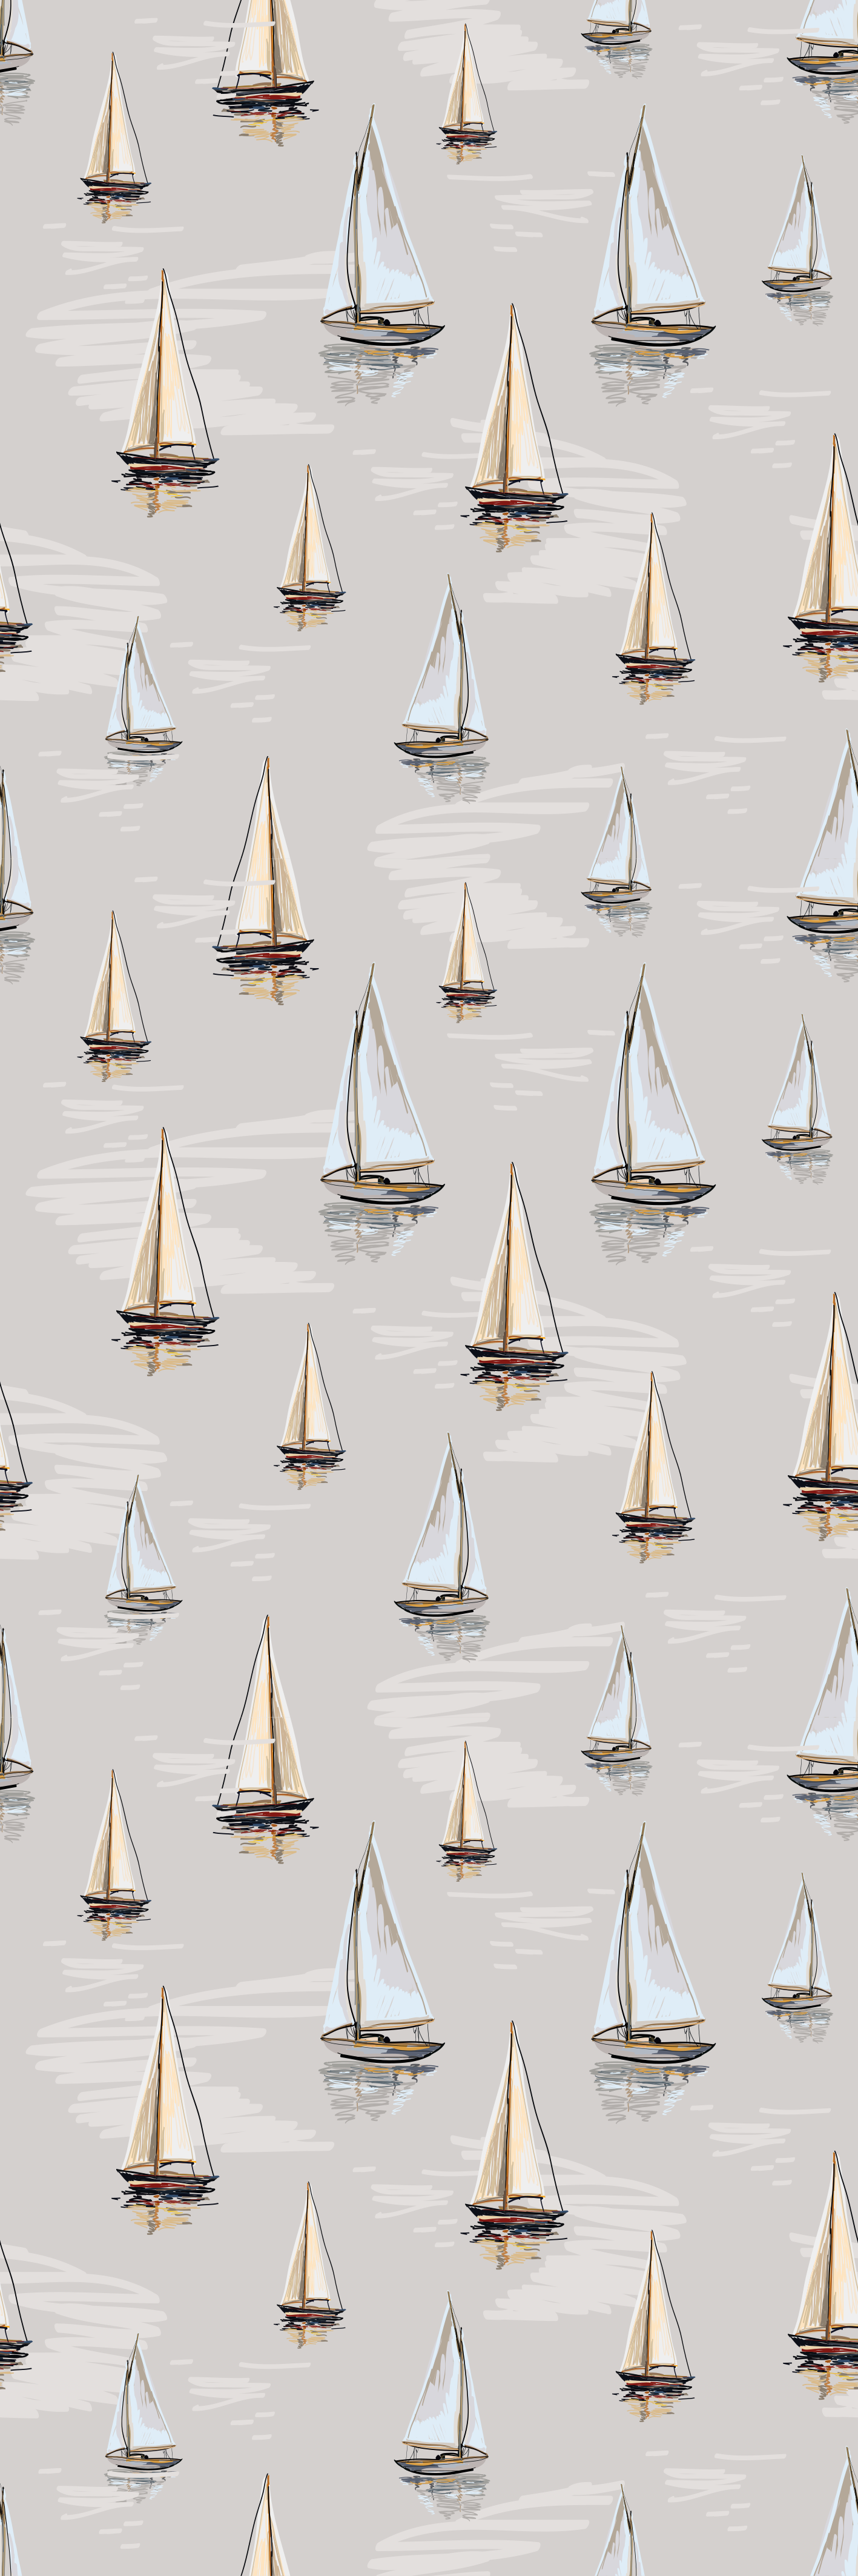 sailboat wallpaper patterns